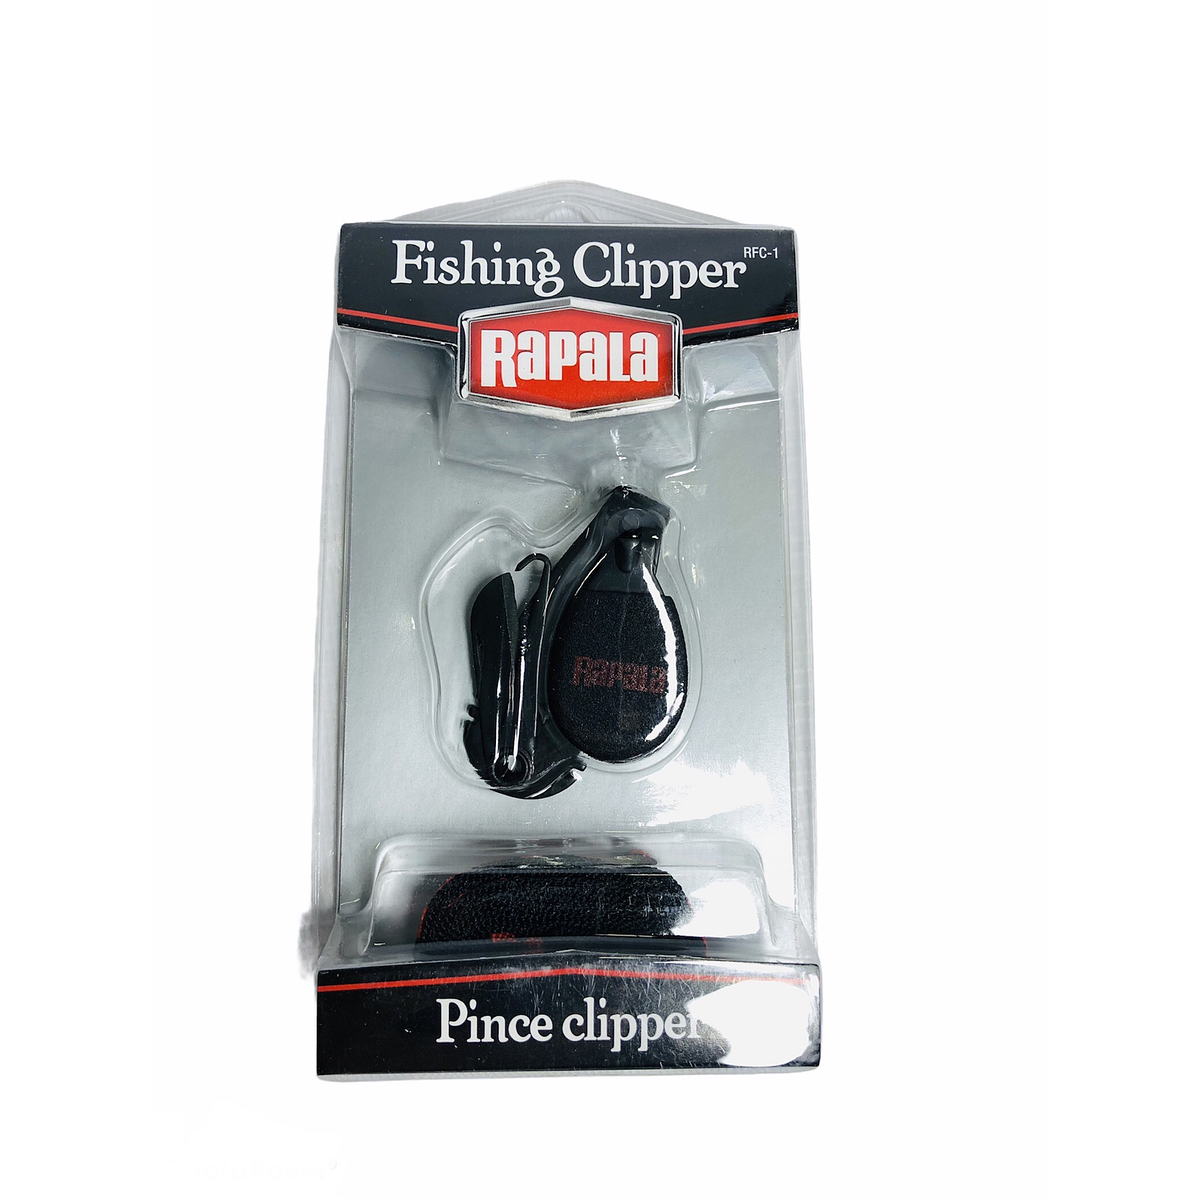 Rapala fishing clipper